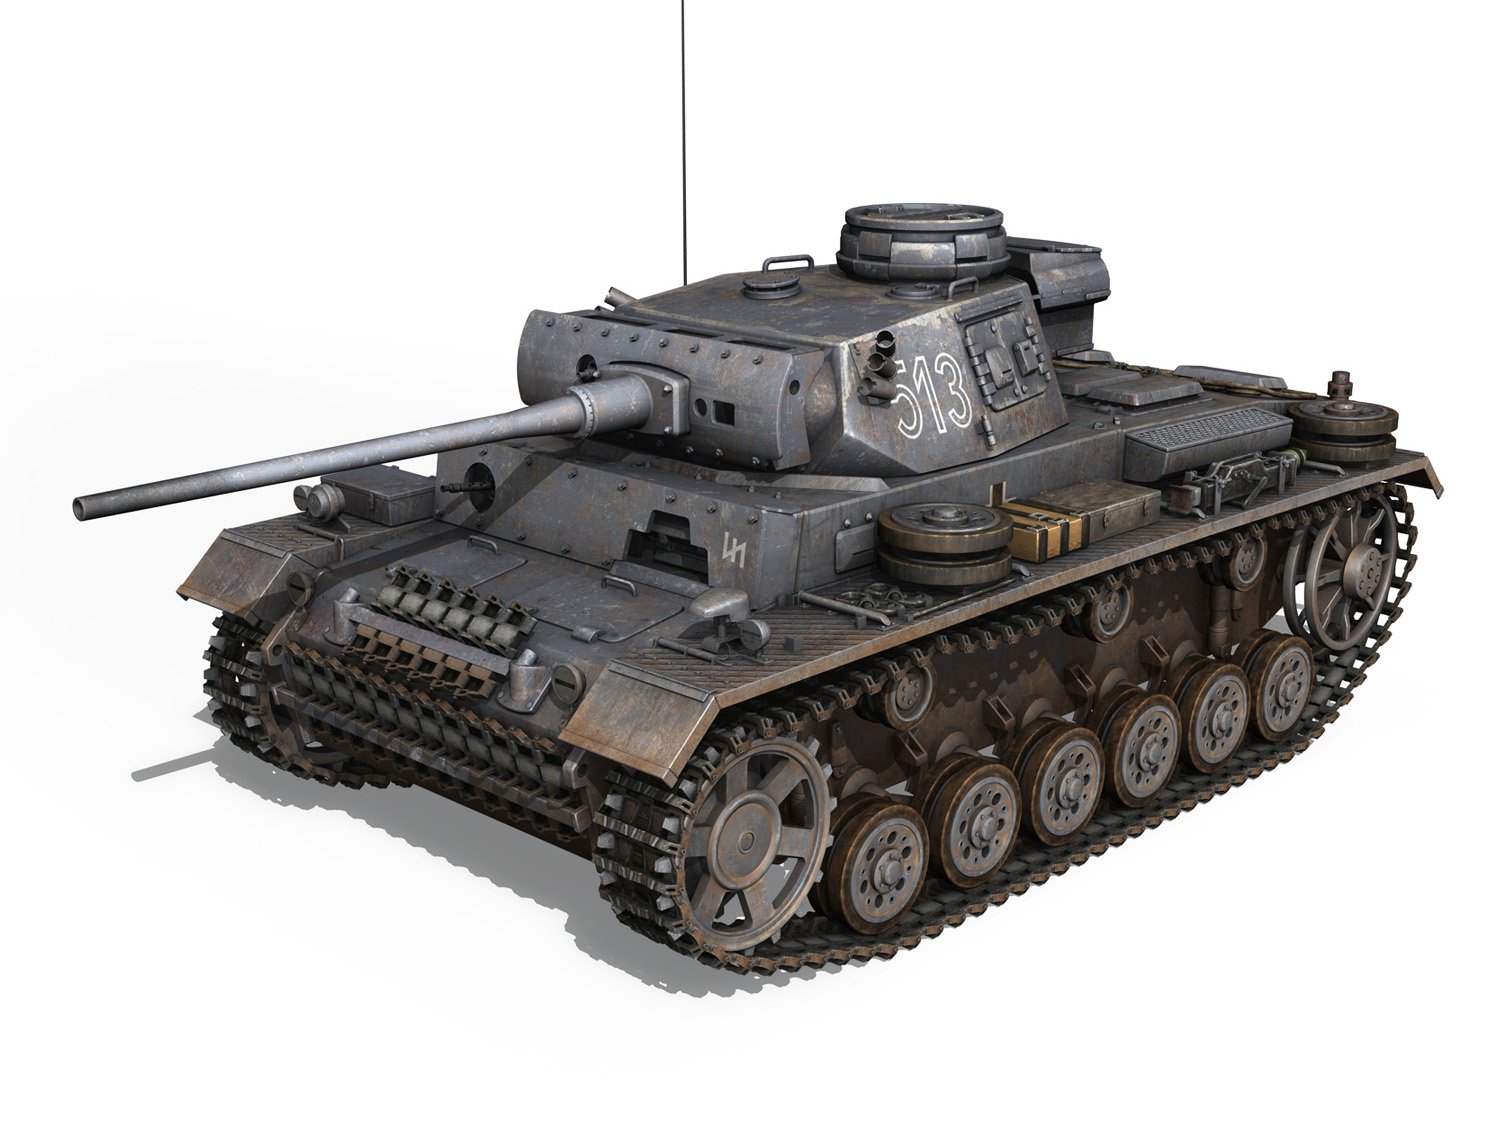 Хори 3 танк. Танк PZ 3. Немецкий танк Panzer 3. PZKPFW III Ausf m. Танк PZKPFW III Ausf.m.